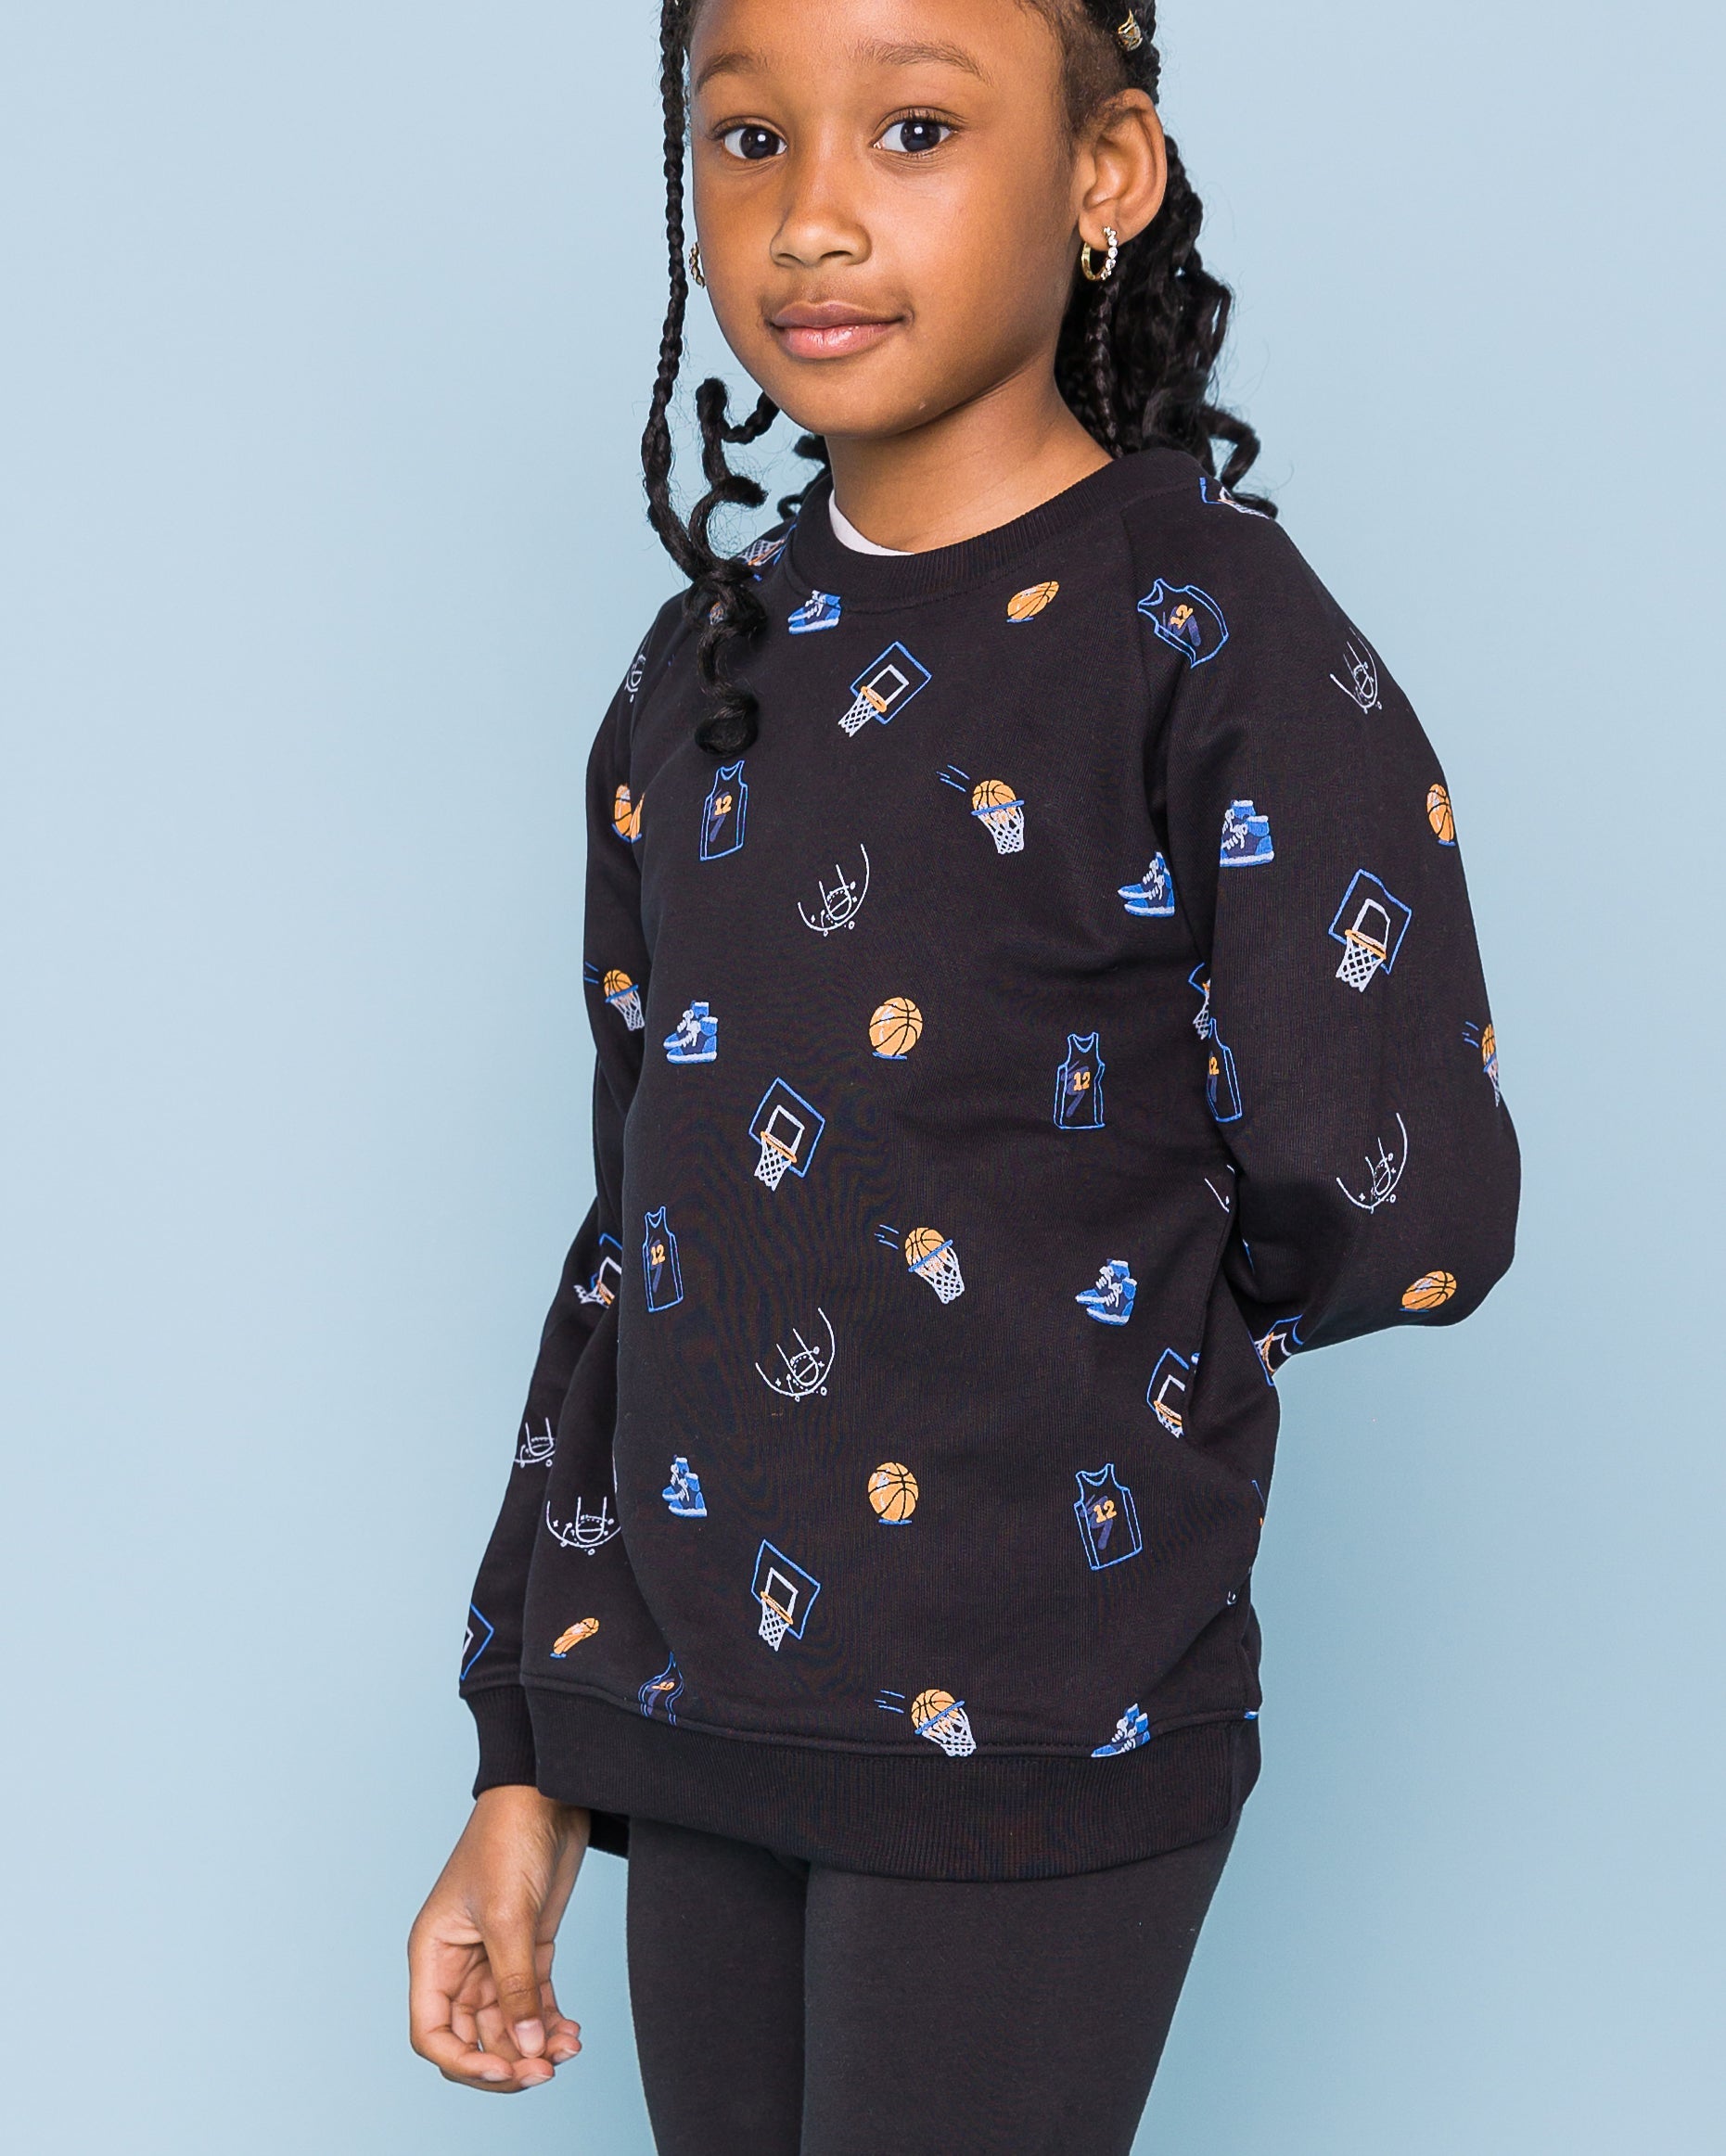 The Organic Printed Pullover Sweatshirt [Basketball on Black]